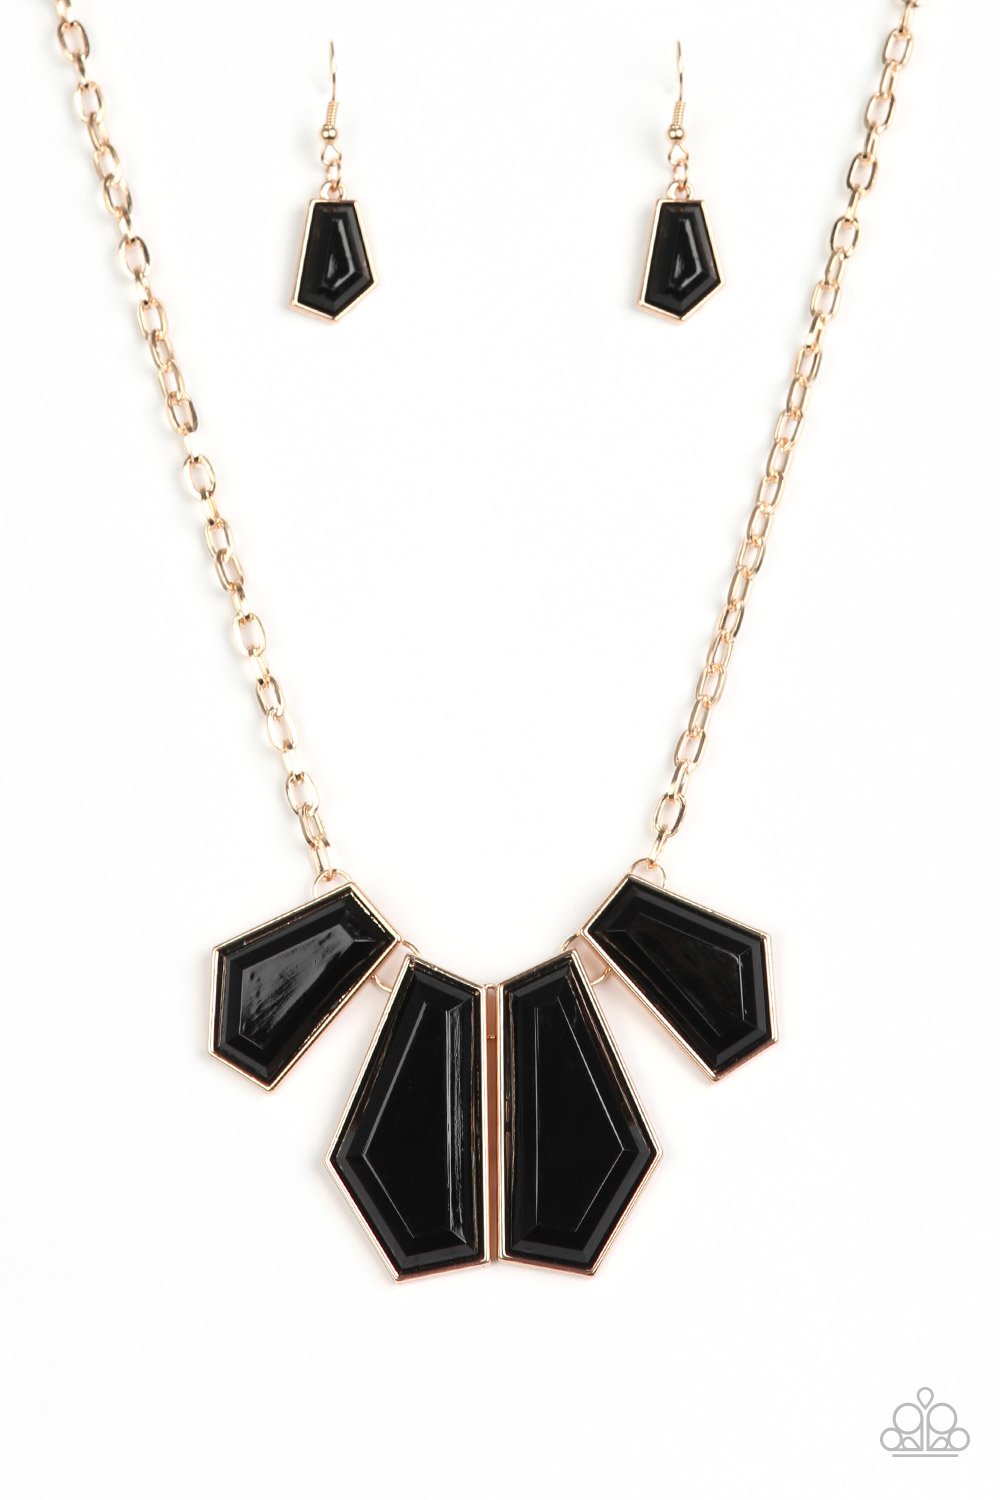 Designer button necklace black & gold #accesories #accesories #20 #grms  #gold #necklace #designs